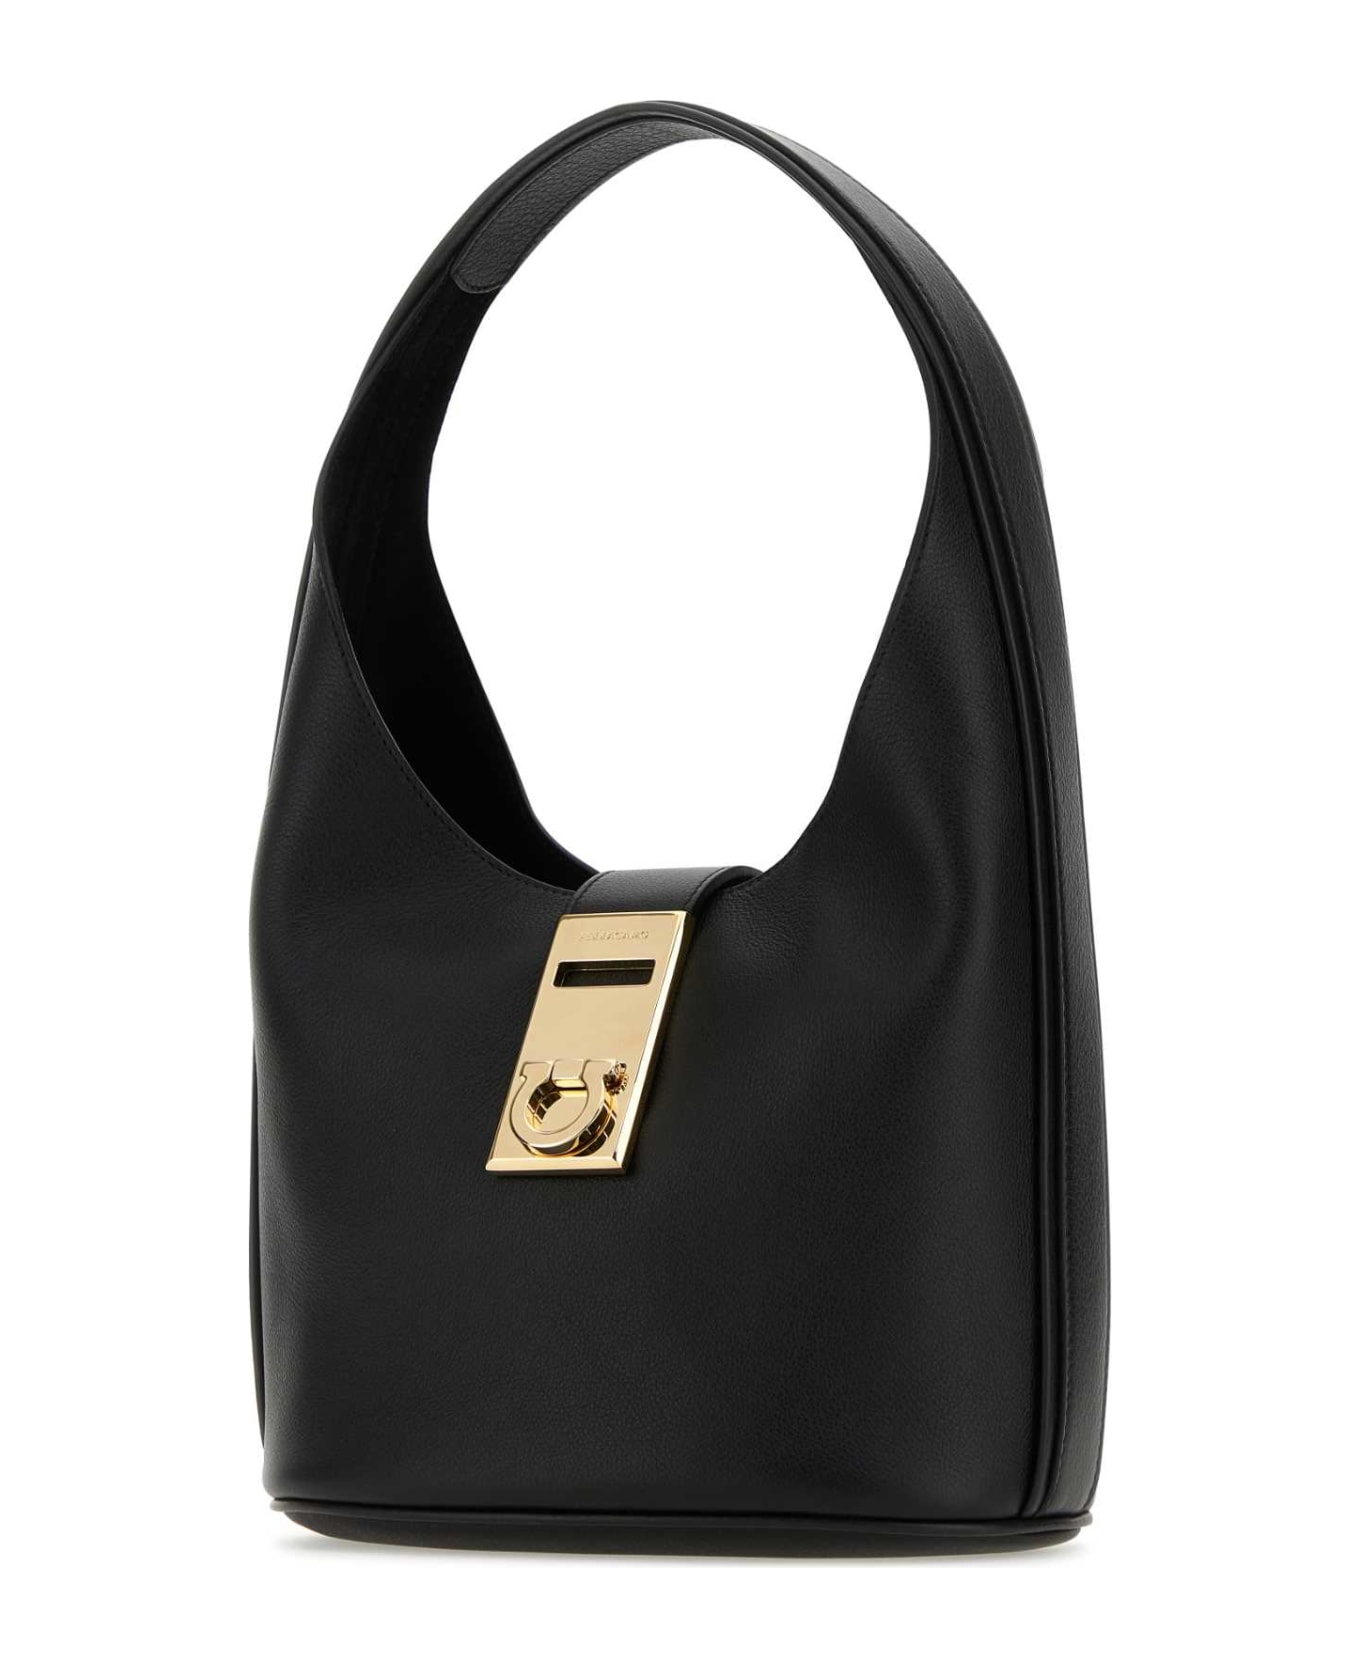 Ferragamo Black Leather Medium Hobo Handbag - NERO